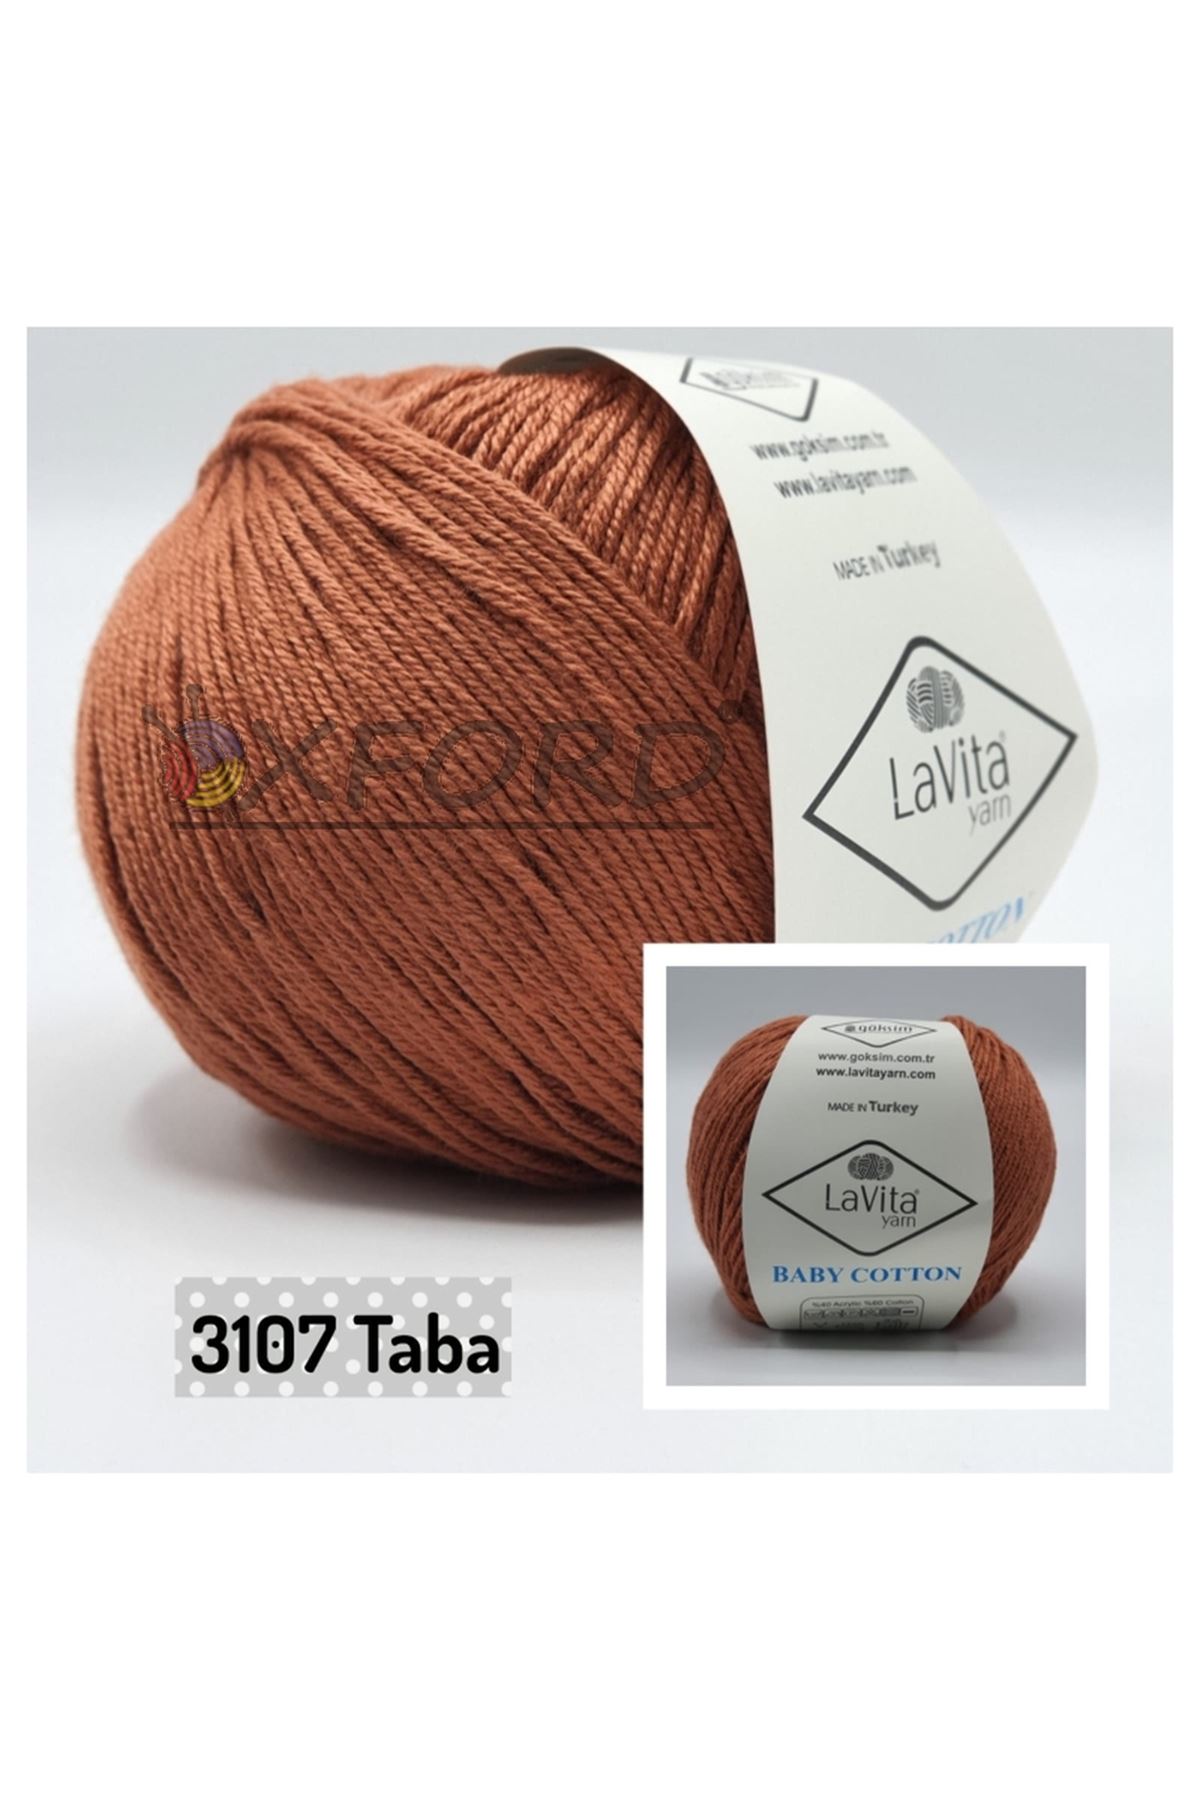 Lavita Baby Cotton 3107 Taba